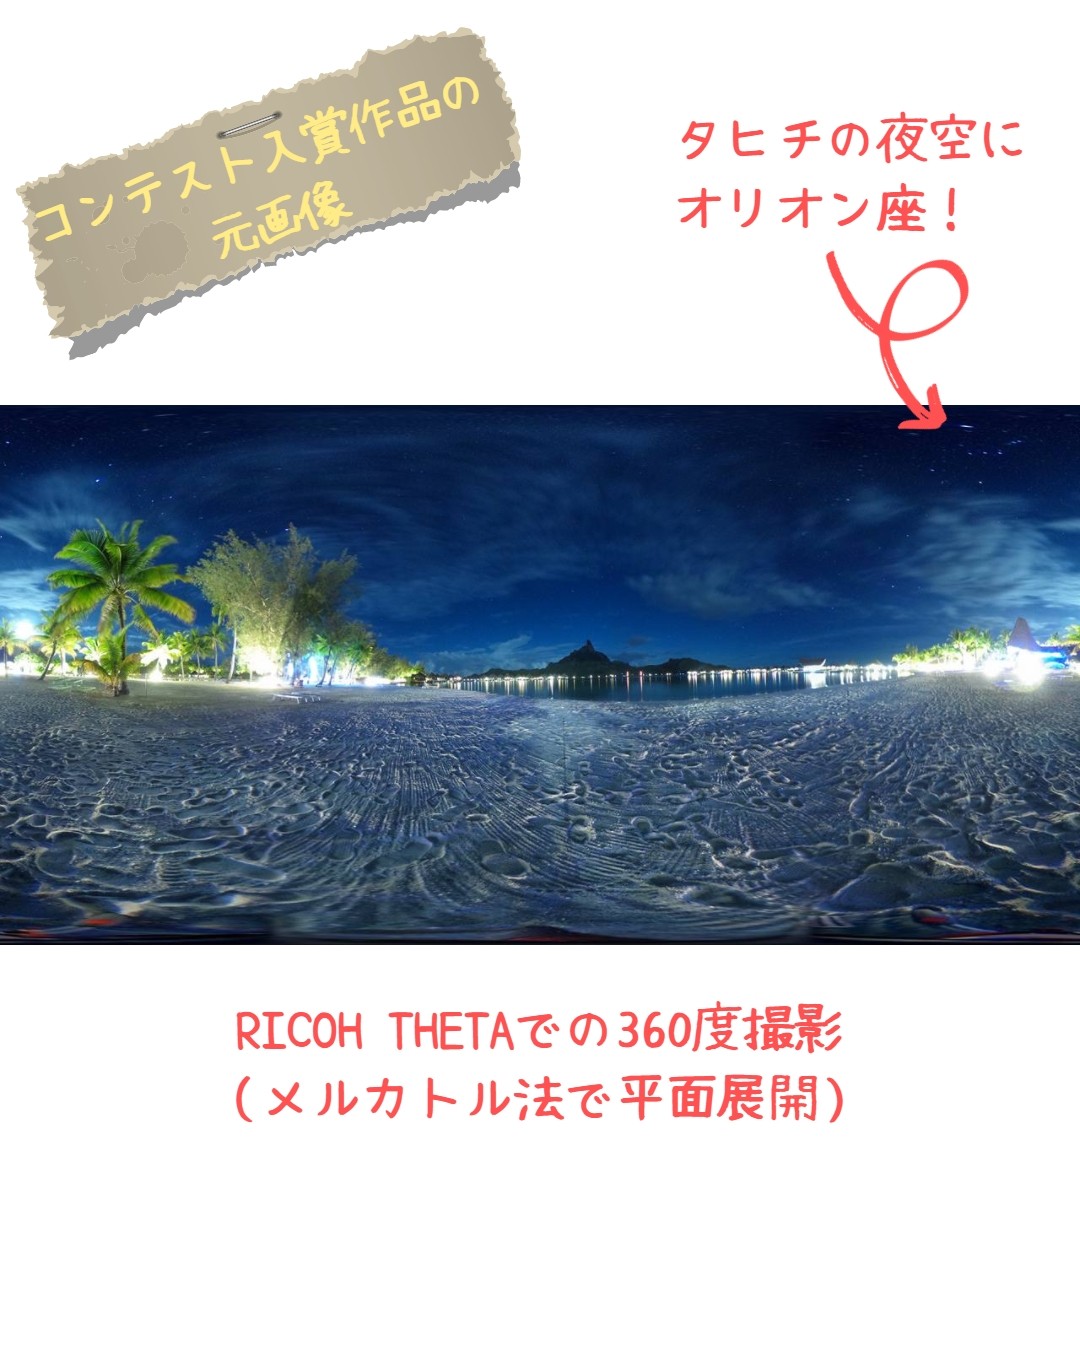 「theta360 フォトコンテスト2016」優秀賞入賞作品「starlit night in Bora Bora」